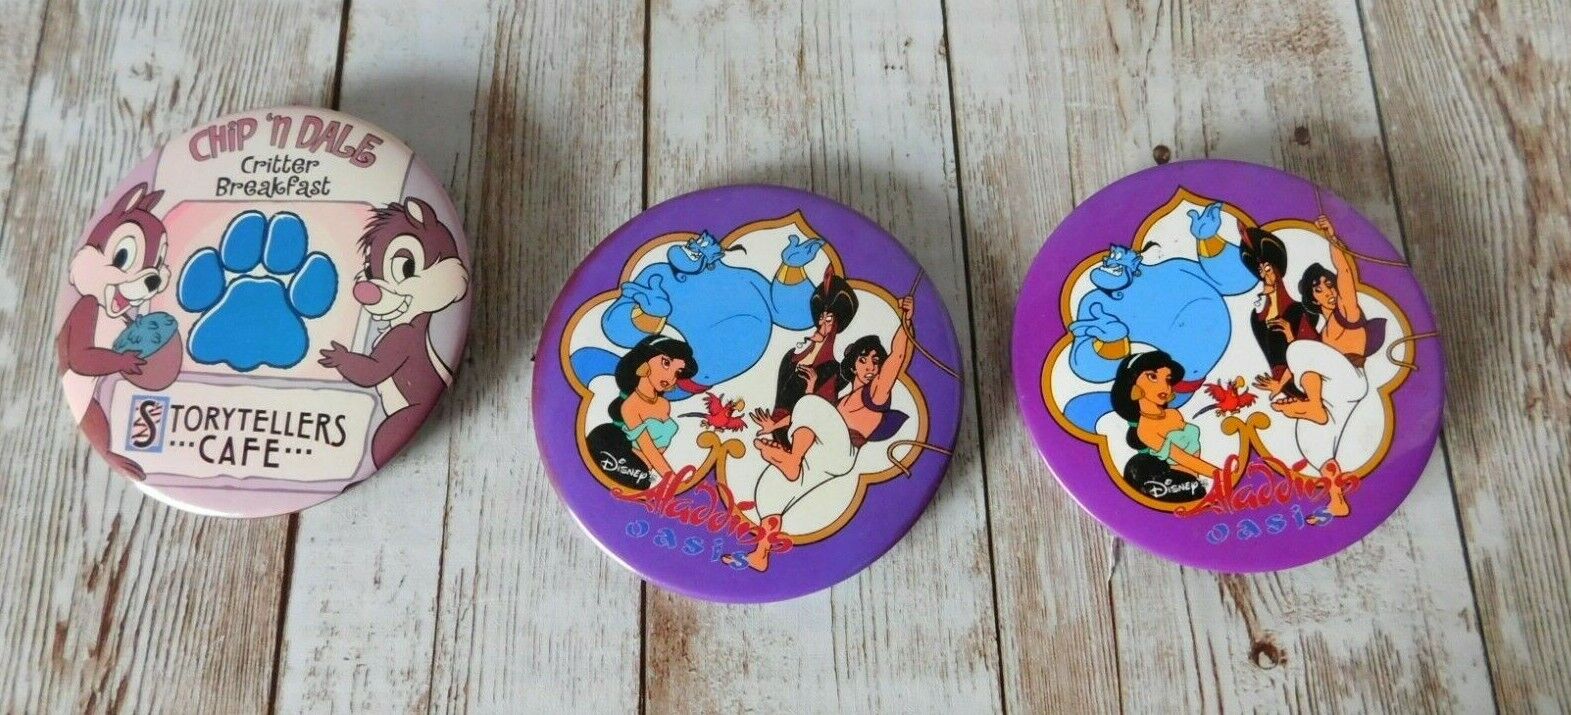 Disneyland Aladdin\' Cafe Chip \'N\' Dale Critter Breakfast Storytellers Cafe Pins 